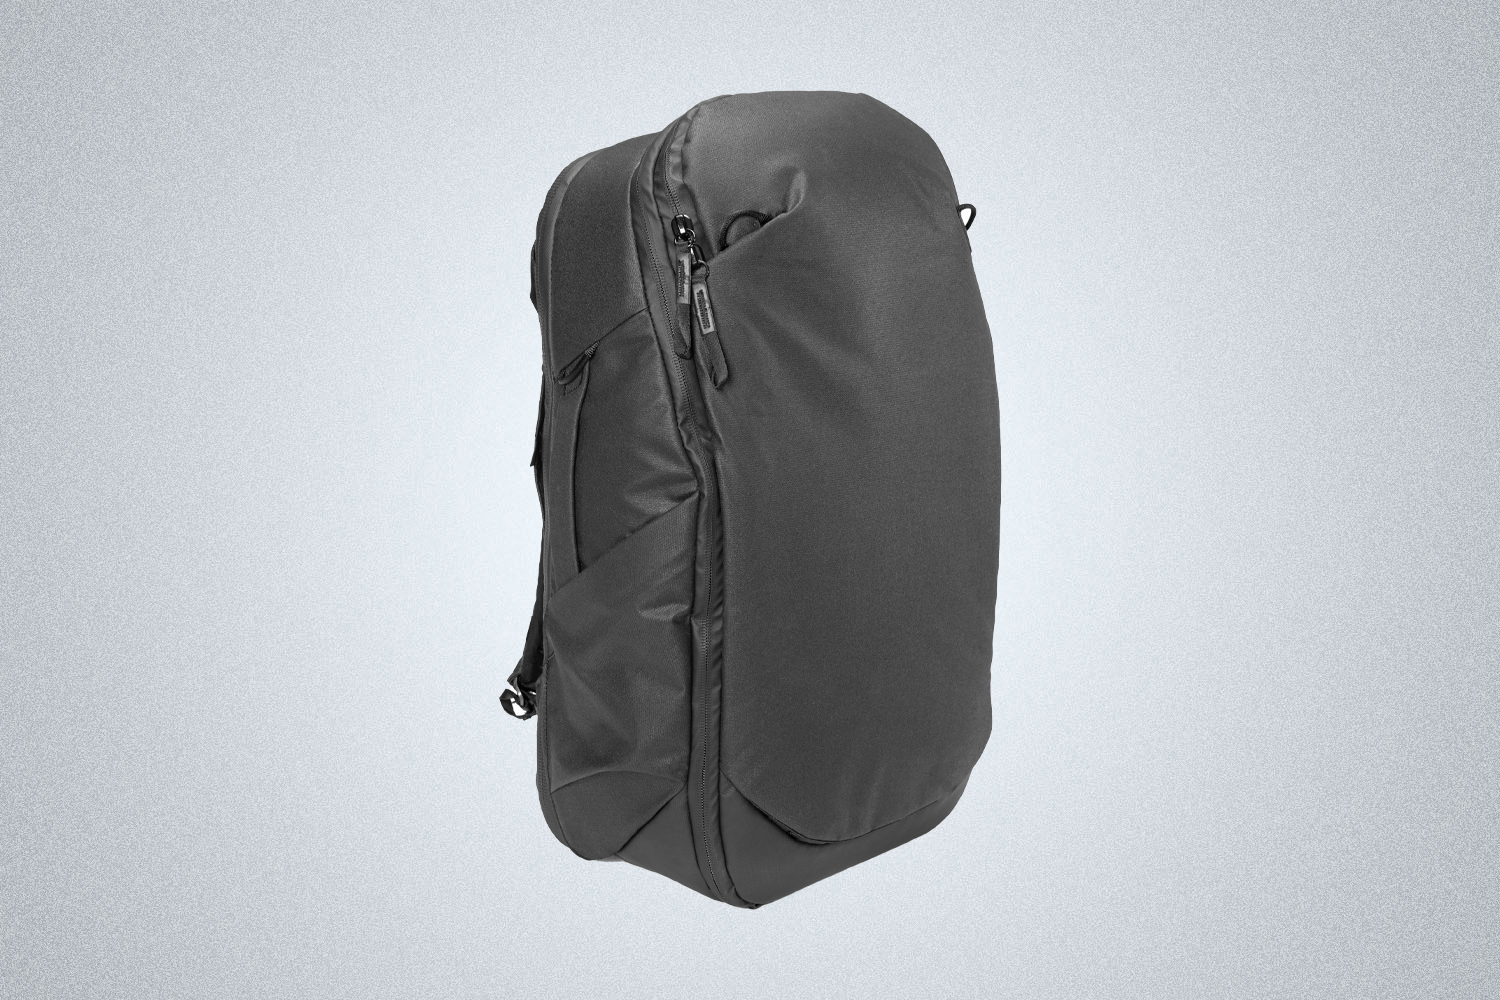 The Peak Design Travel Backpack in black